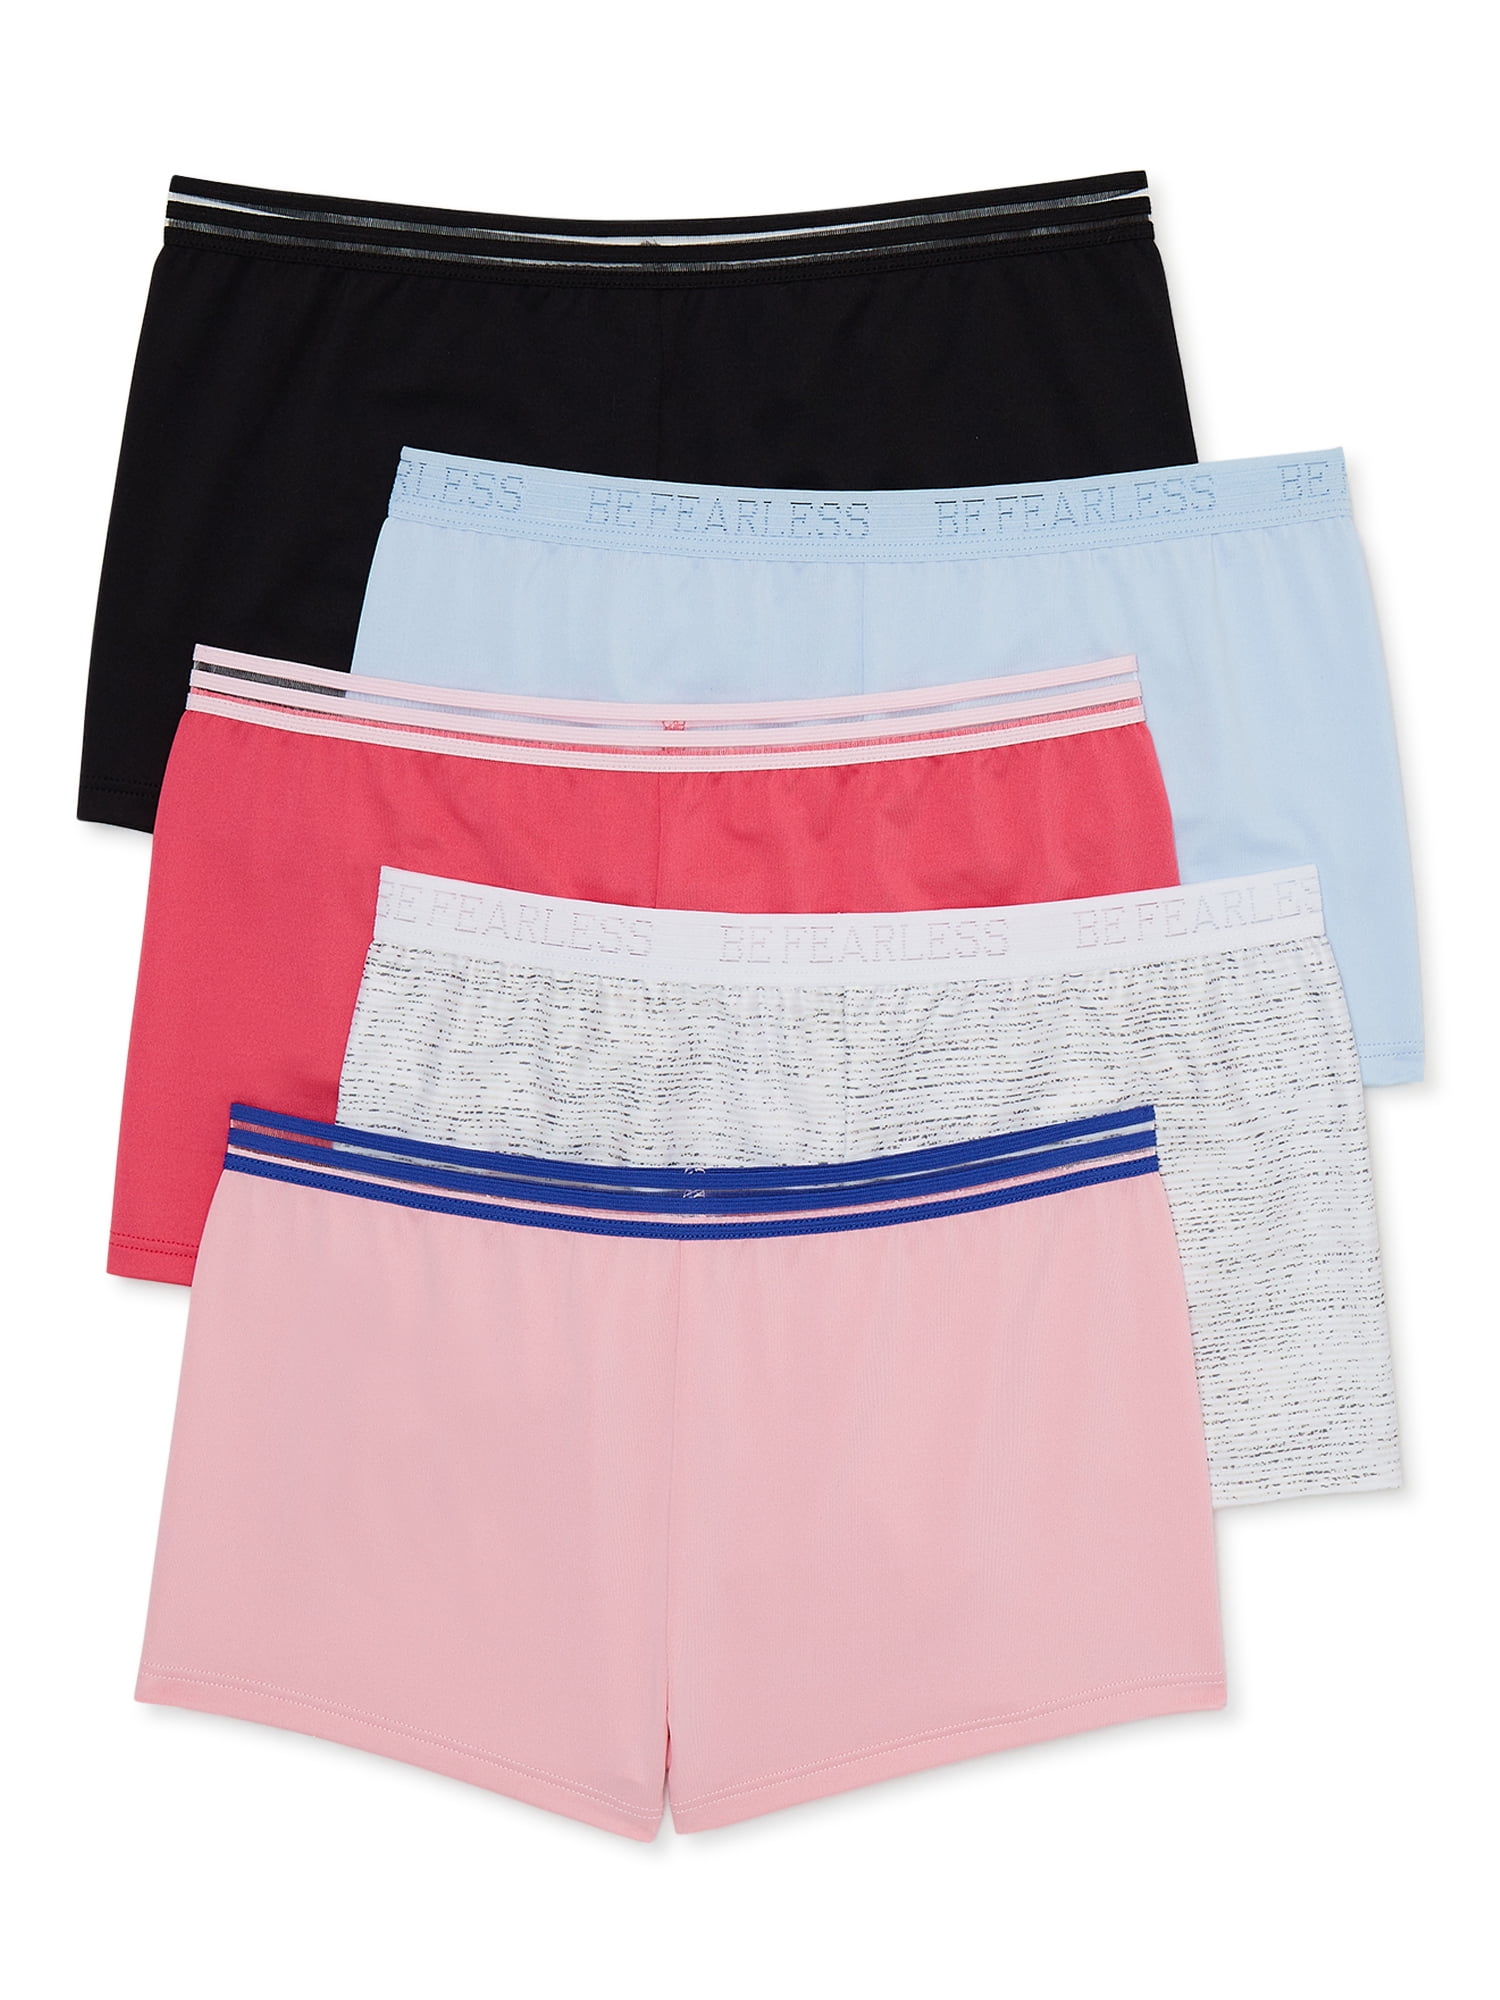 Athletic Works Girls Active Shorts Underwear, 5-Pack, Sizes S-XL 